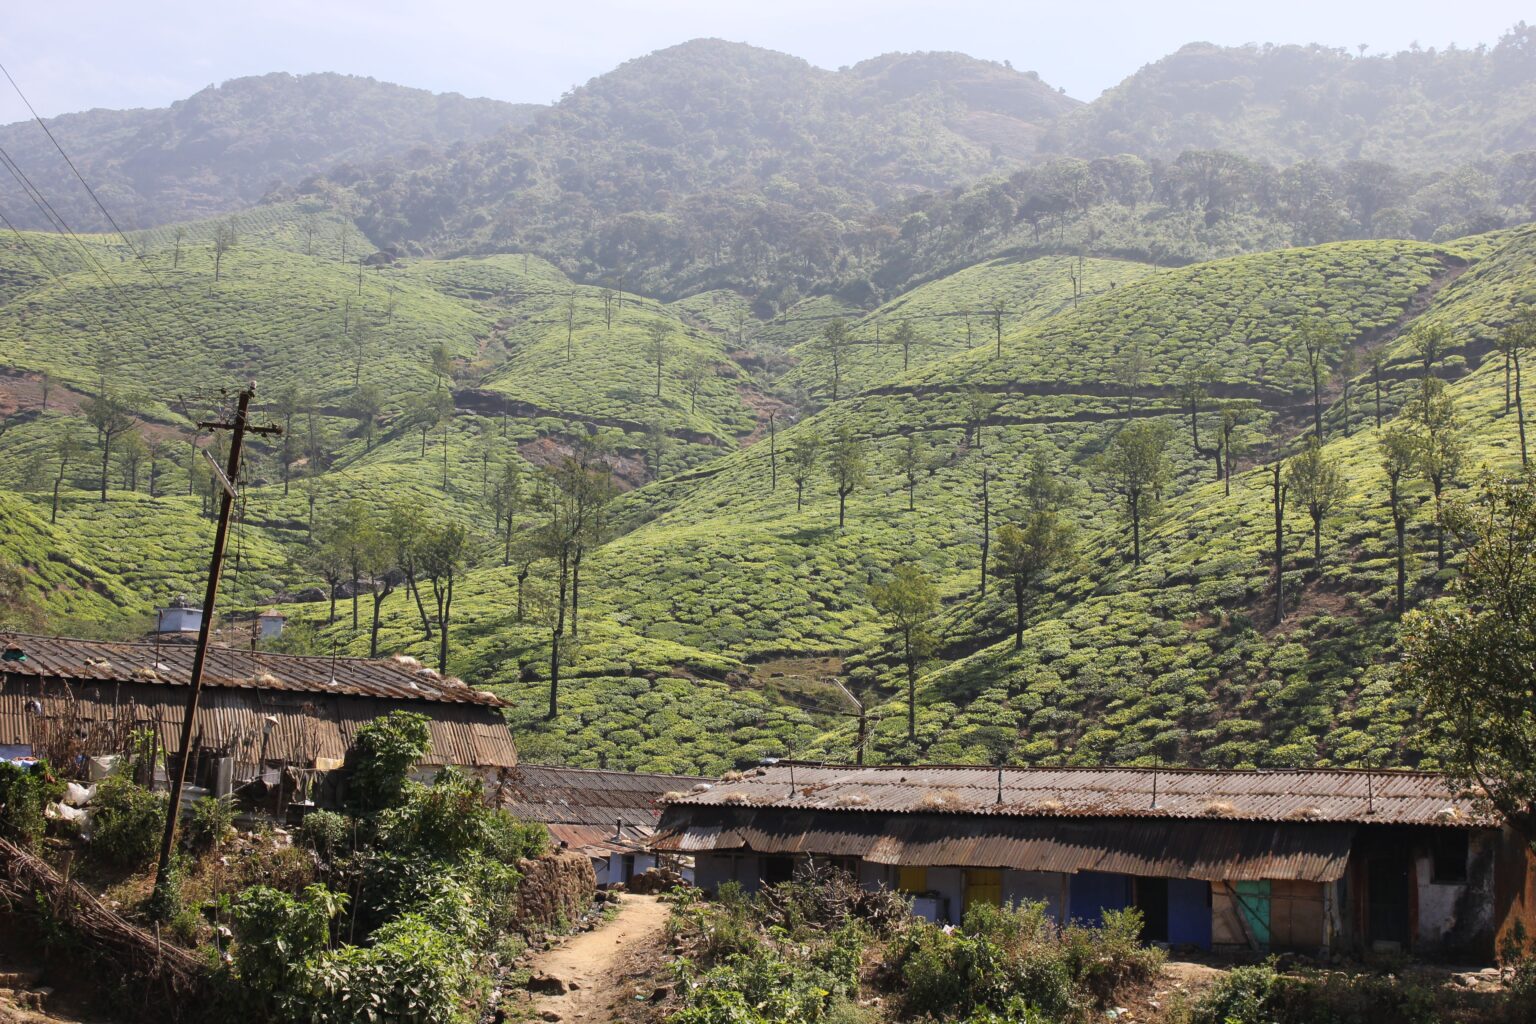 The scenic Anaimalai Ranges landscape surrounding the Thalanar Estate coffee farm in India